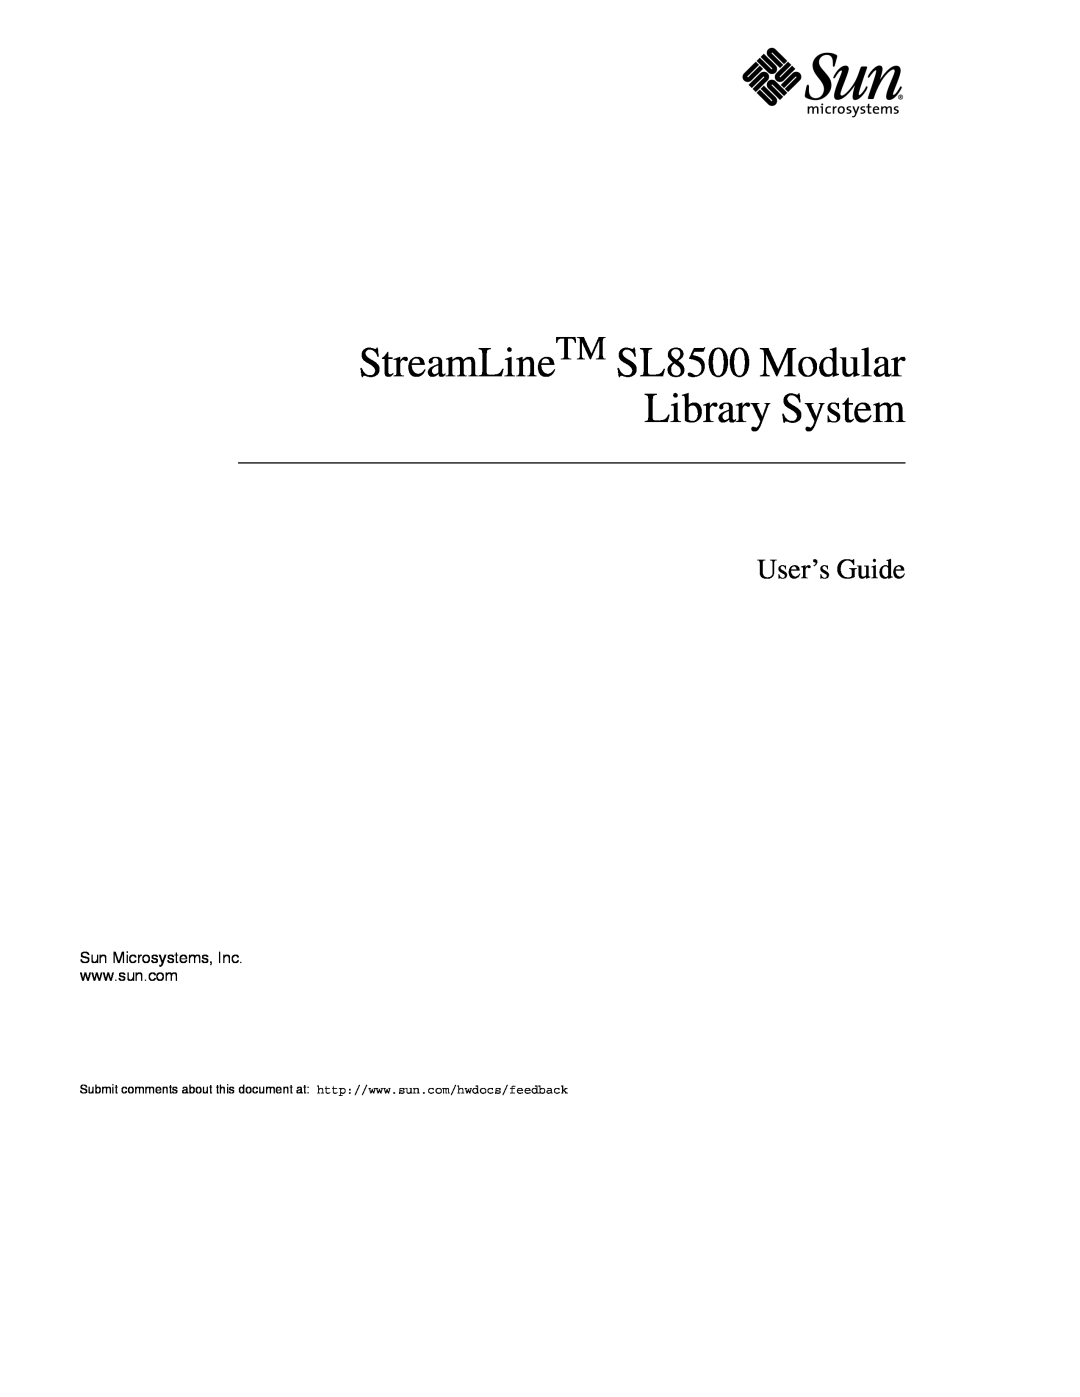 Sun Microsystems manual User’s Guide, StreamLineTM SL8500 Modular Library System 